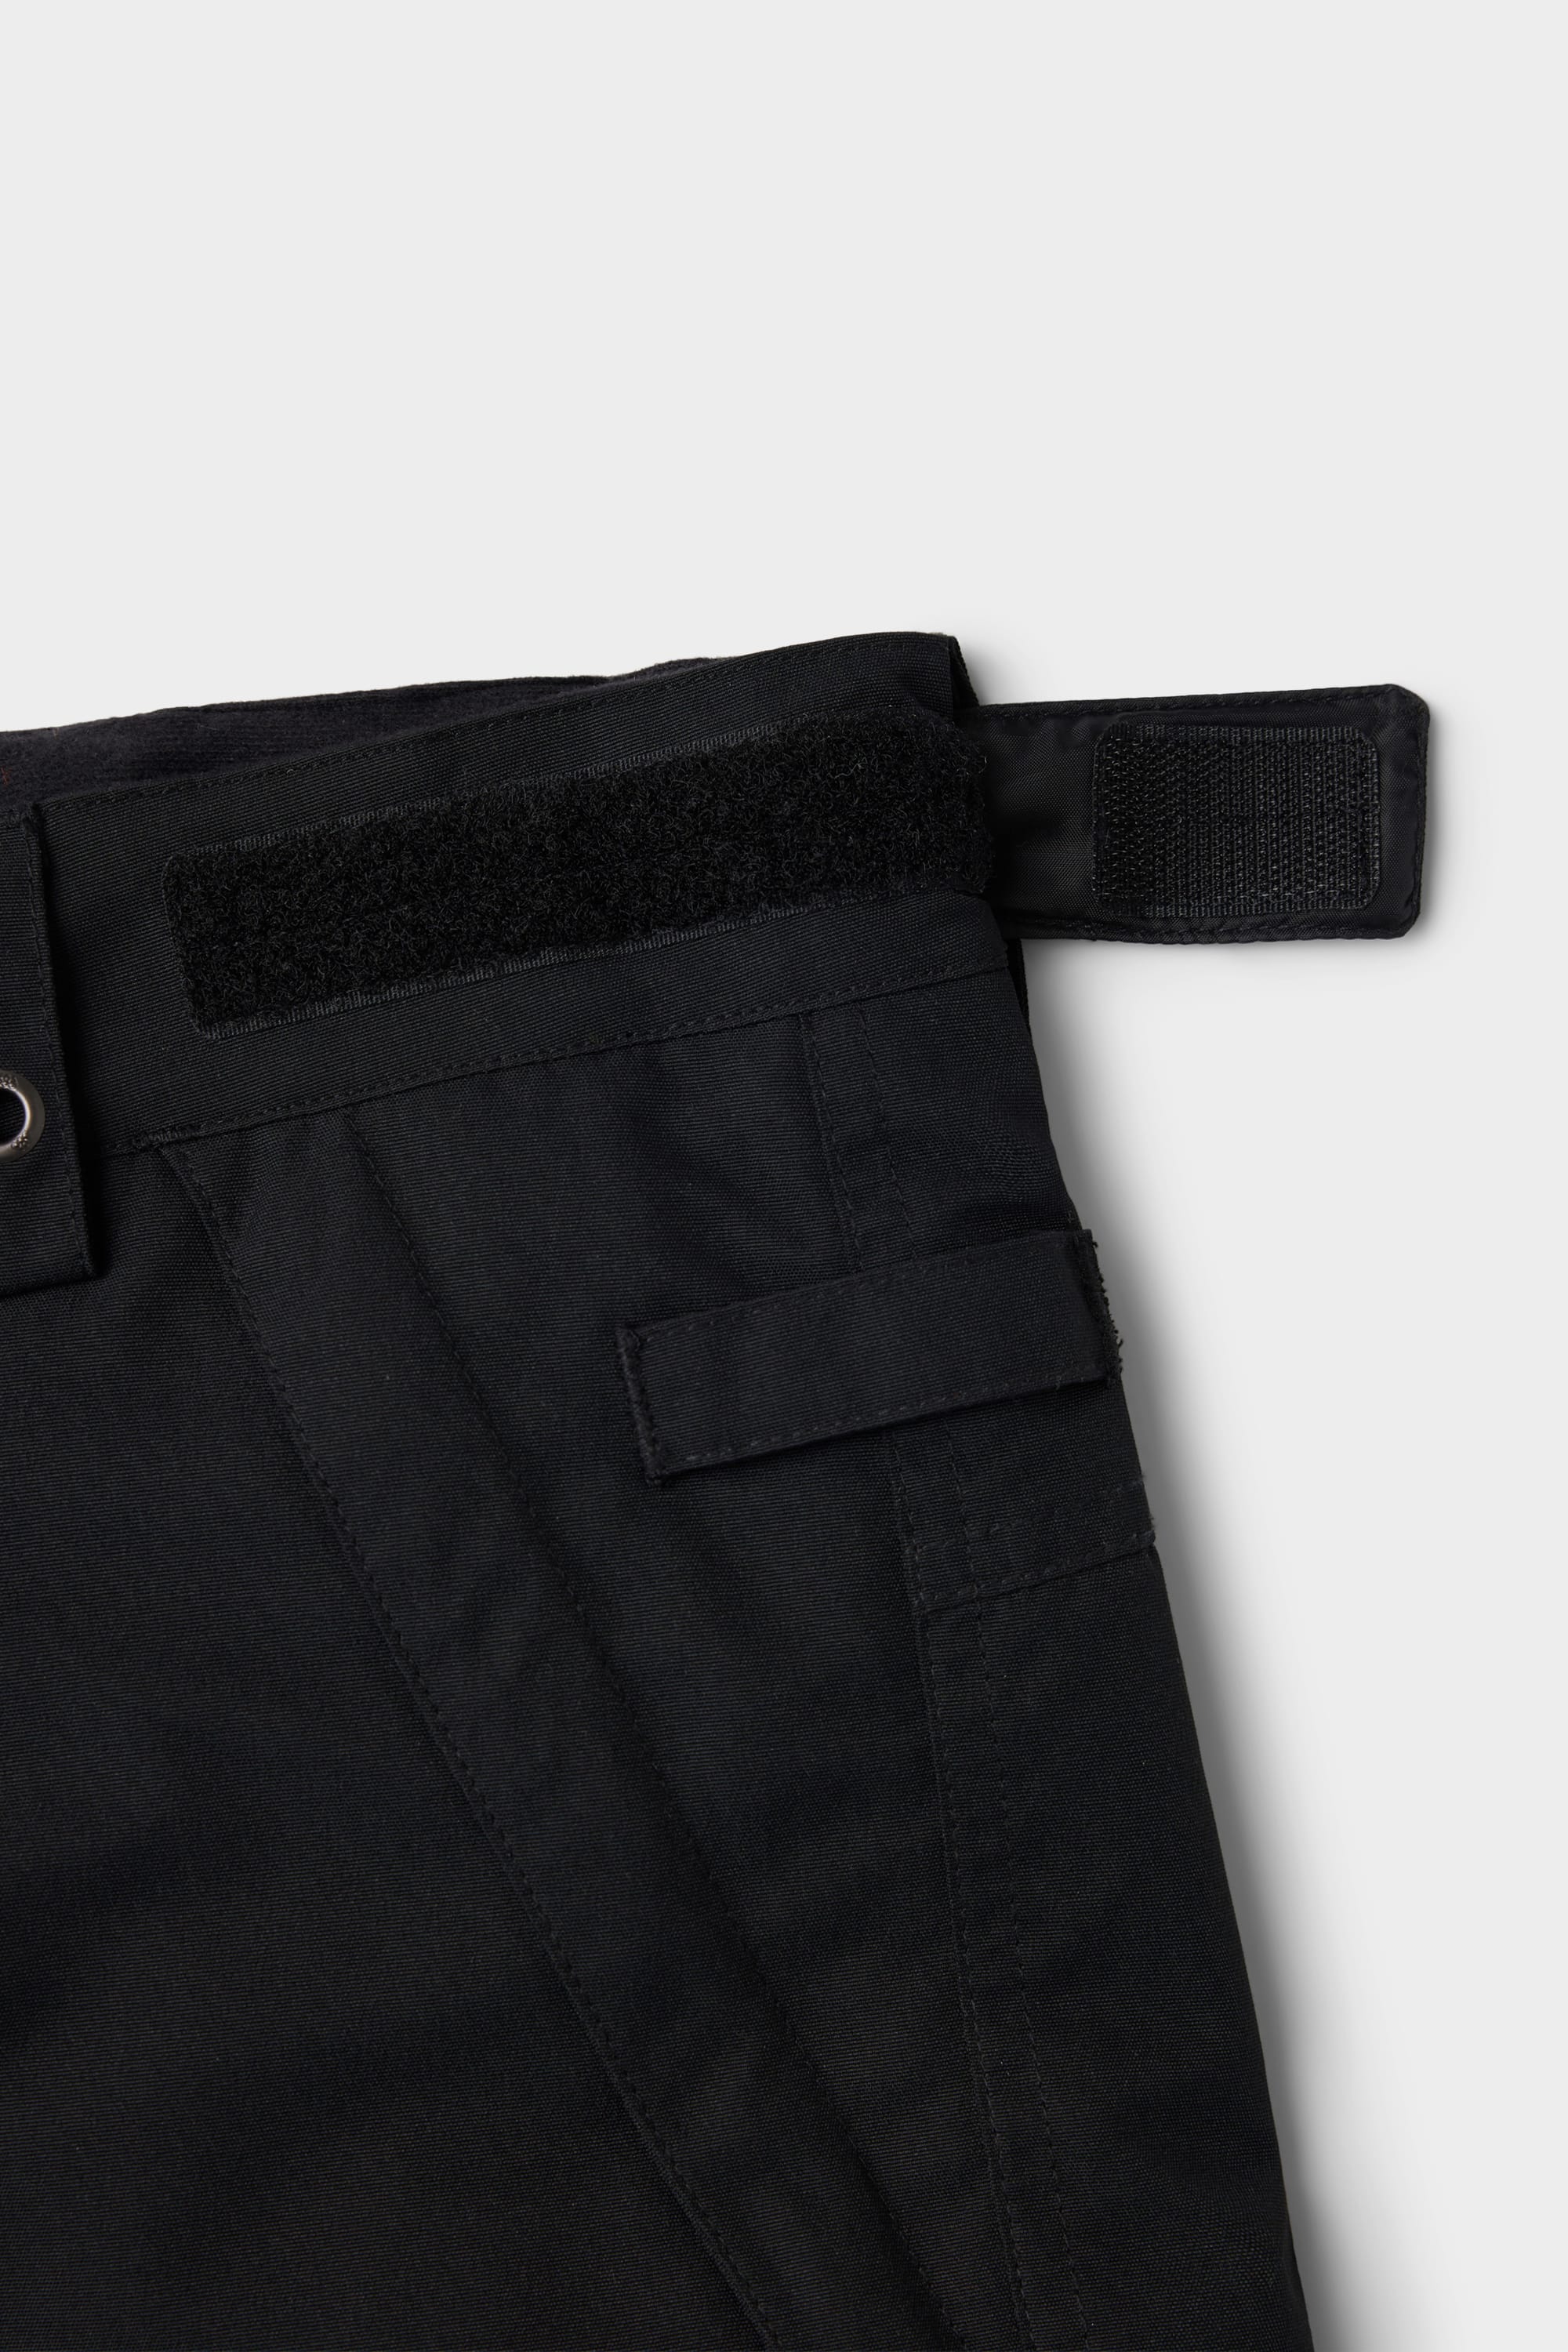 BAIKAL men's insulated trousers :: Technoavia